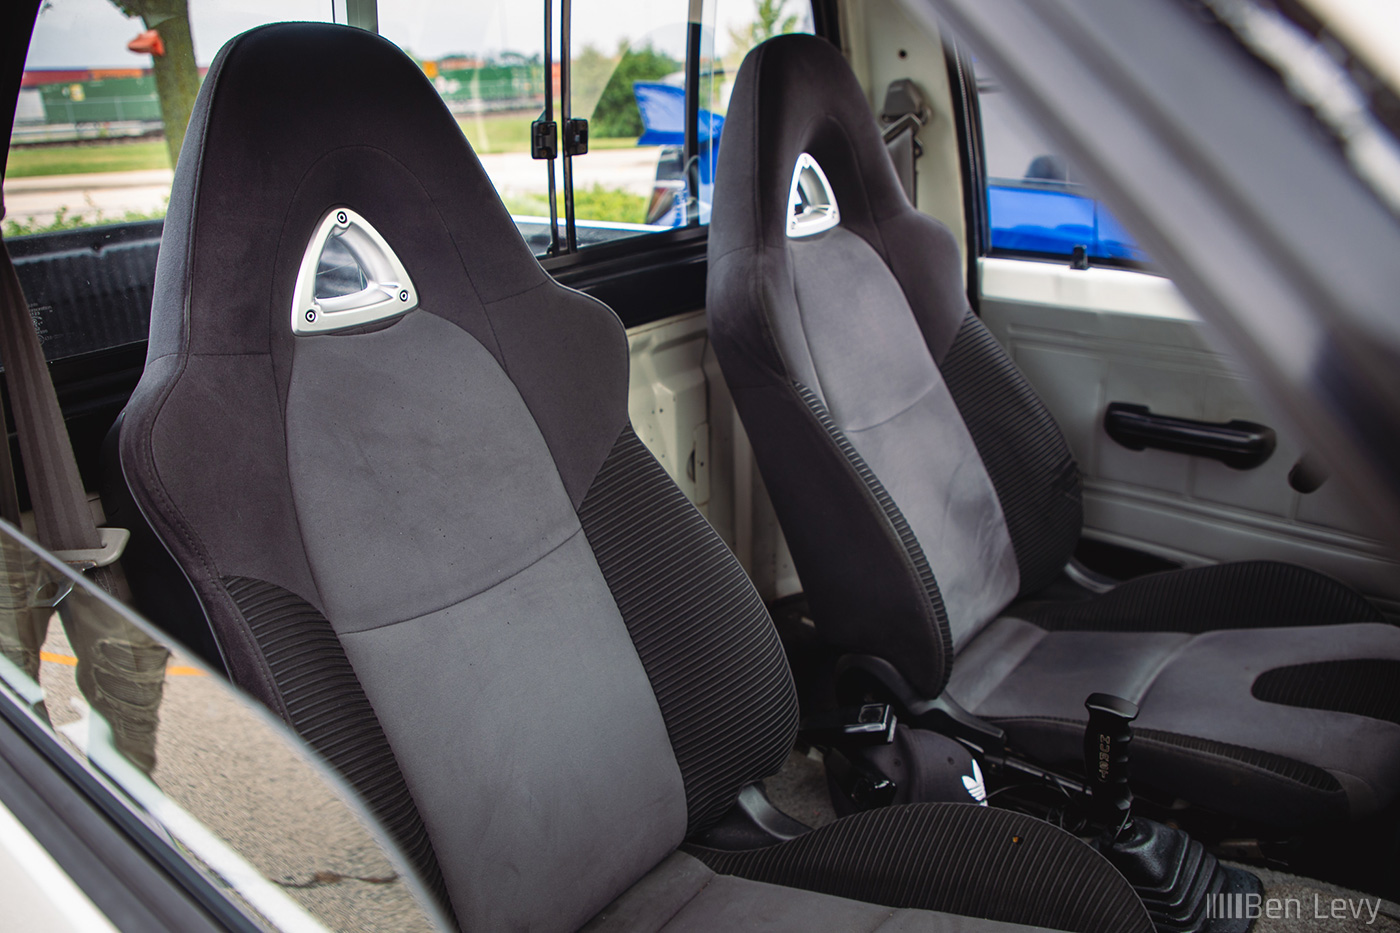 RX-8 Seats in a Mazda Pickup